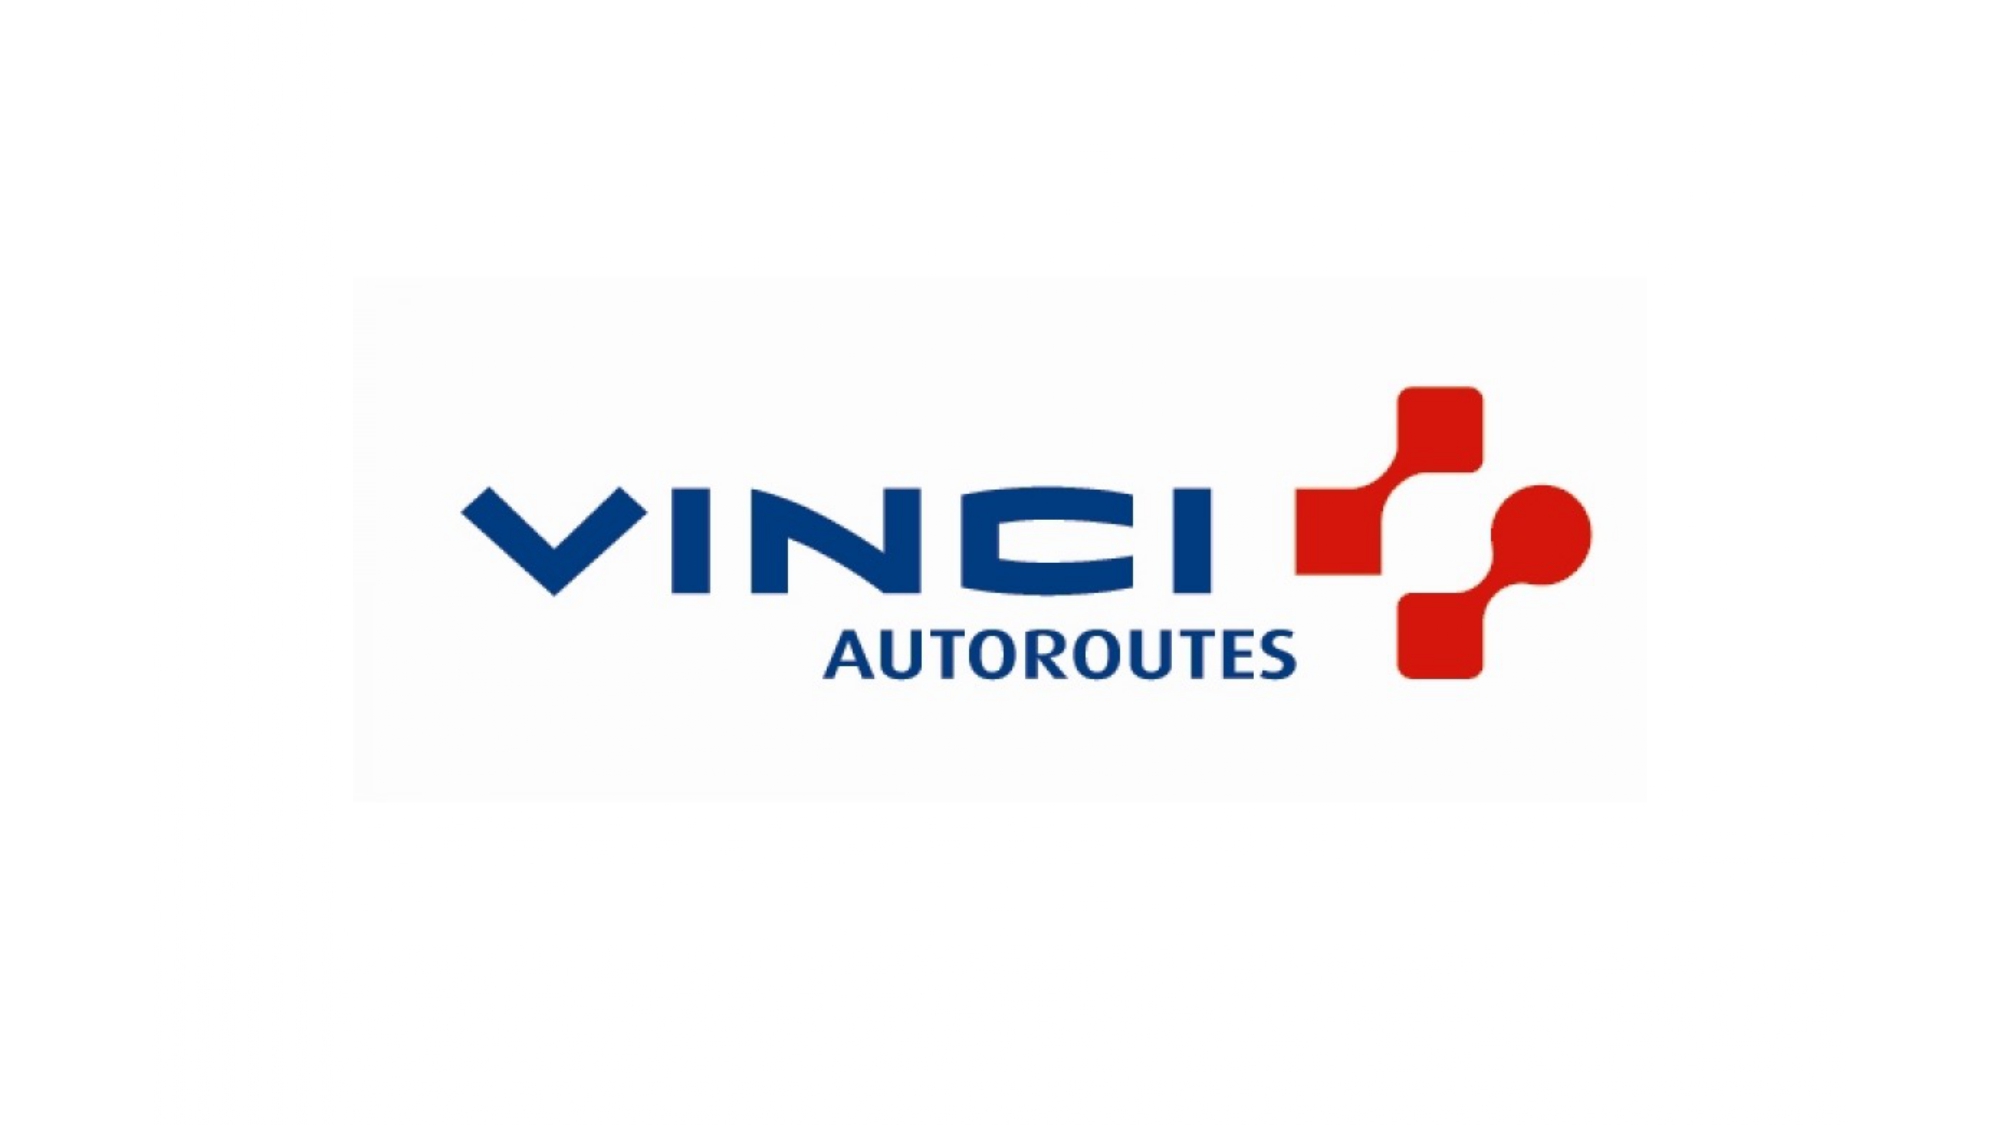 Vinci autoroutes logo formation_page-0001